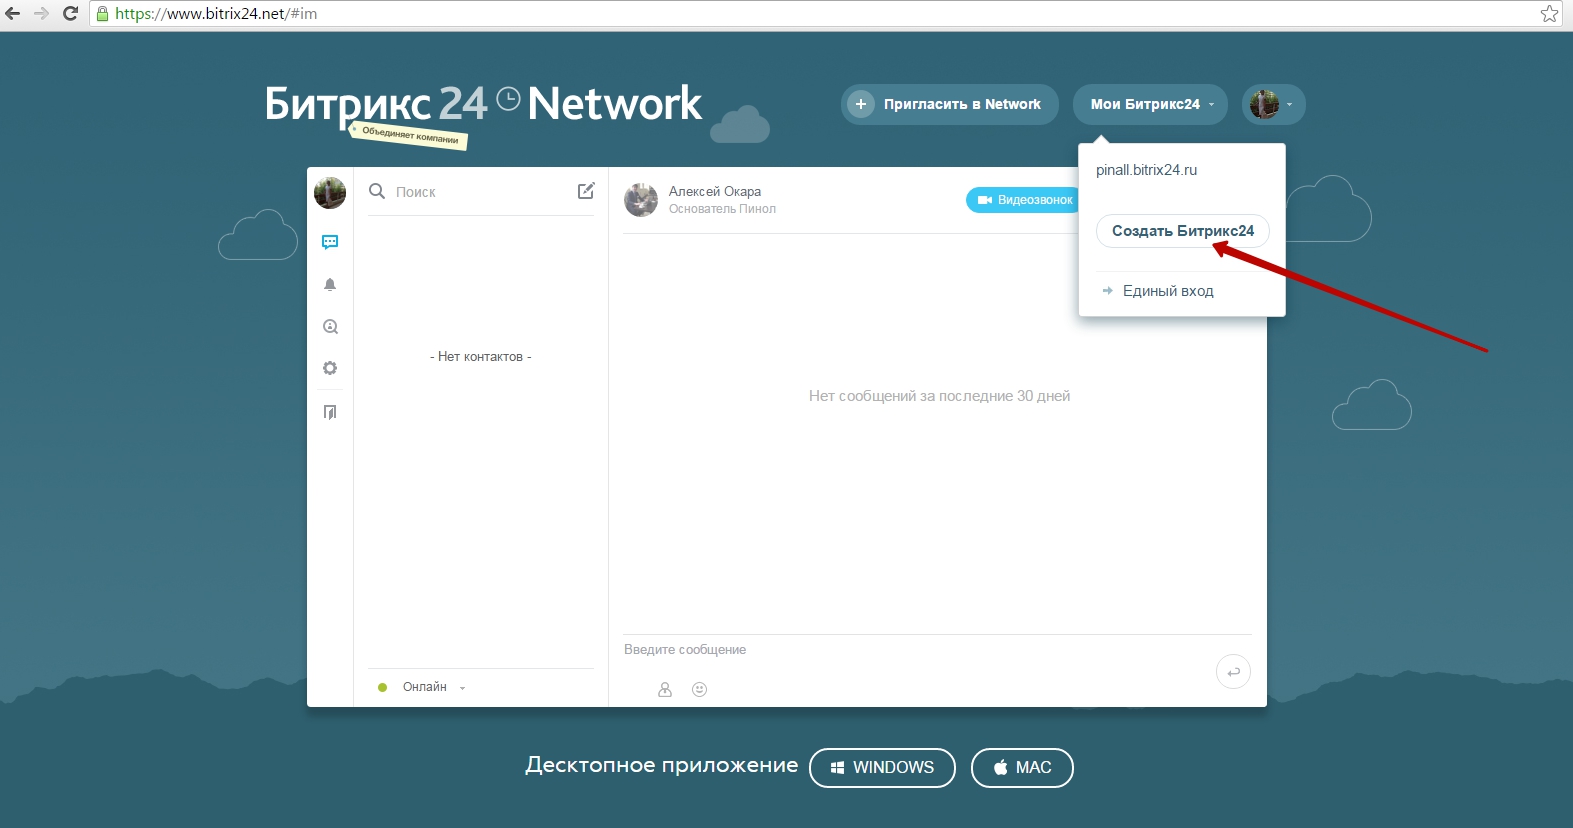 Создание Битрикс24 в Network